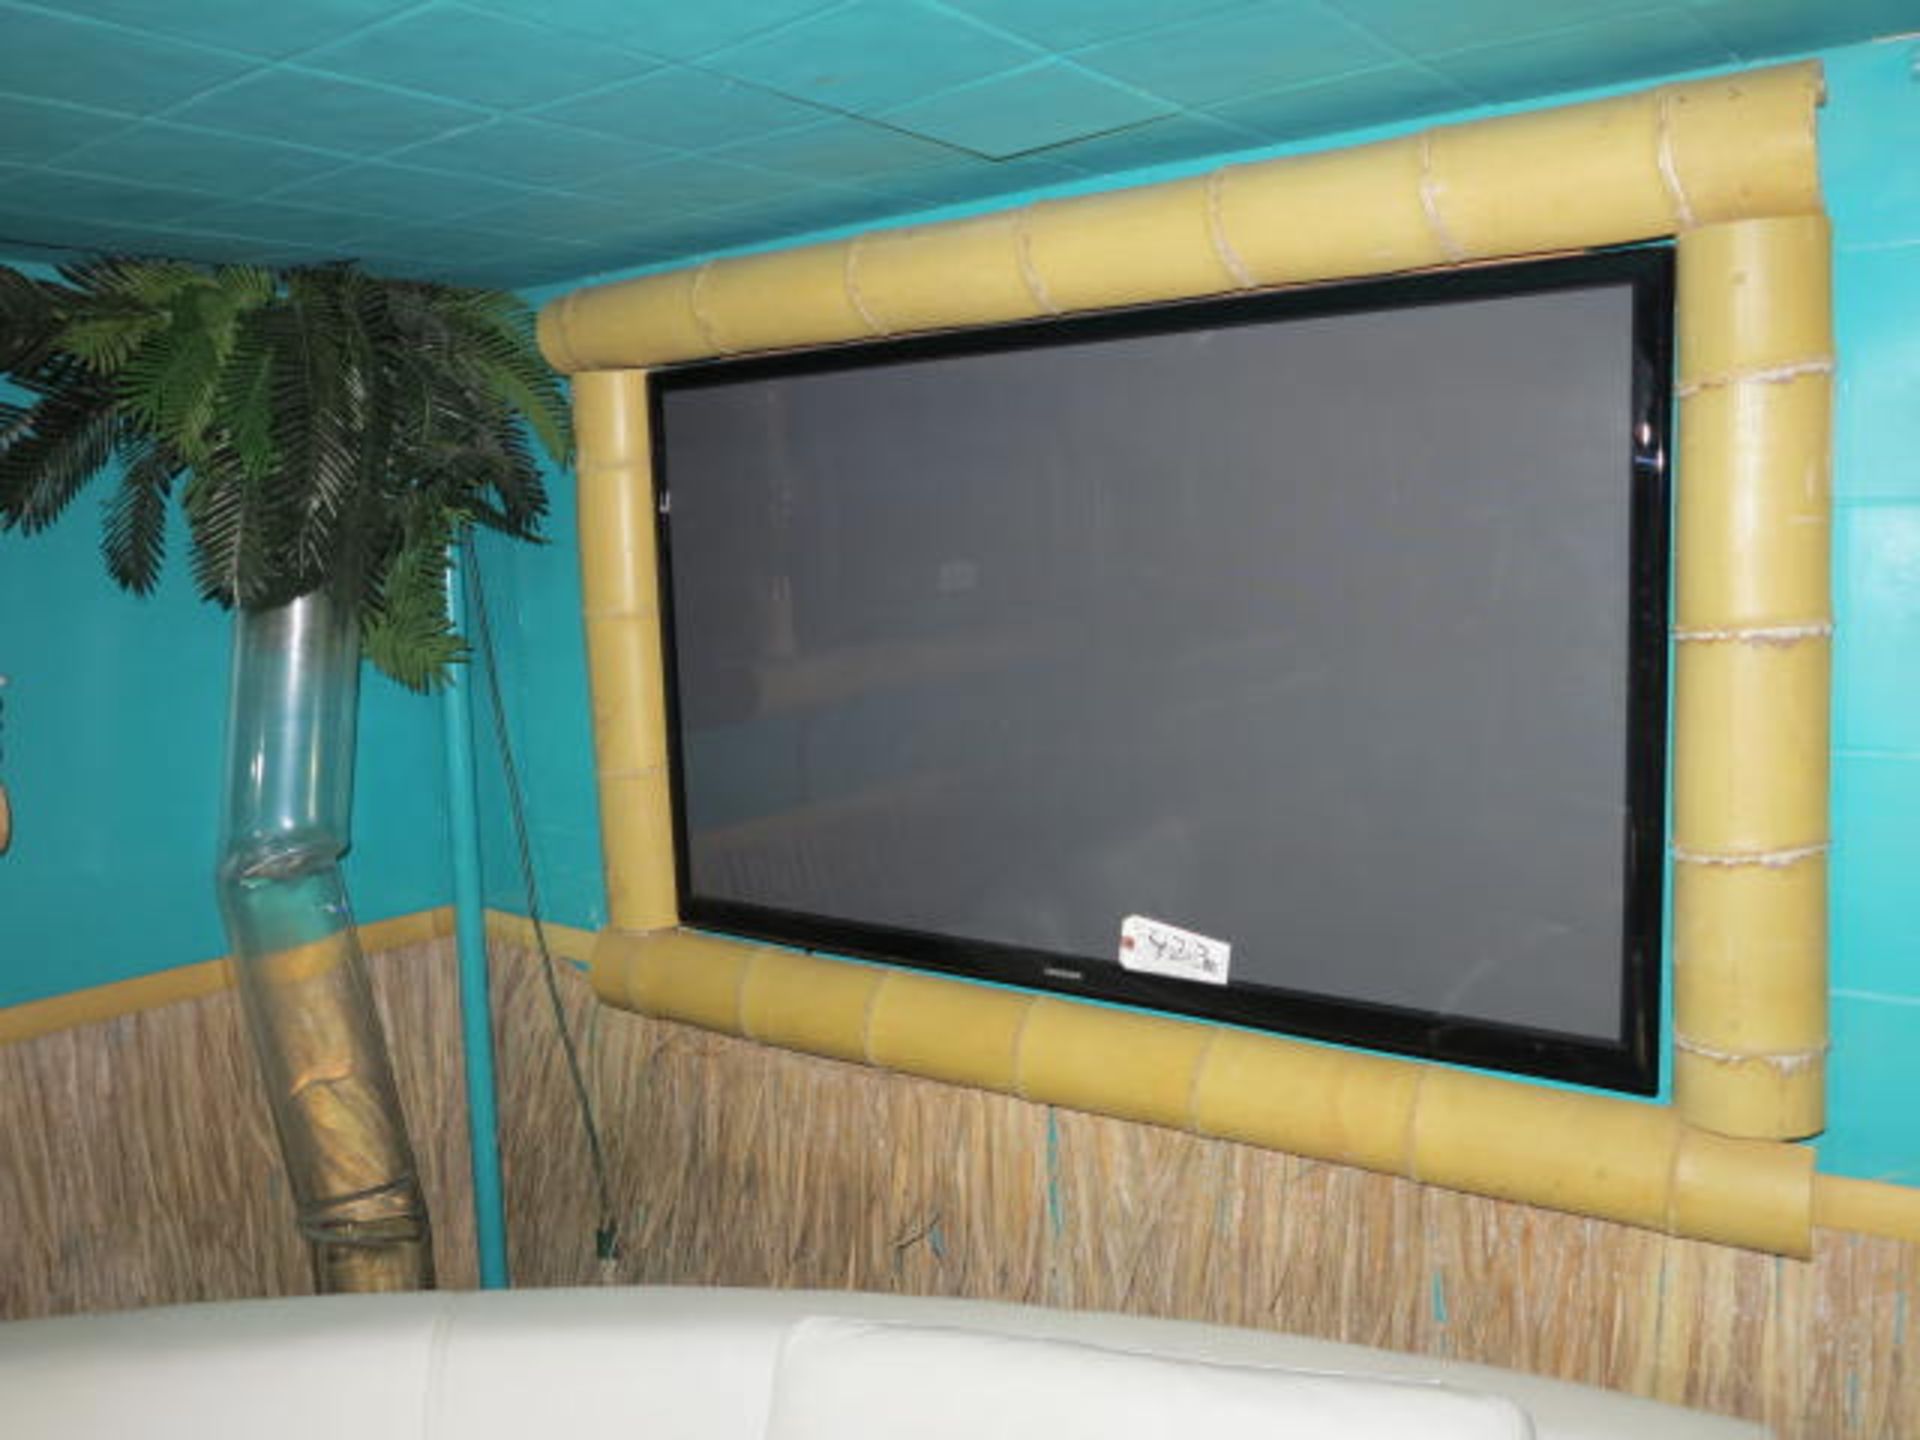 Samsung 48'' LCD Flat Screen TV